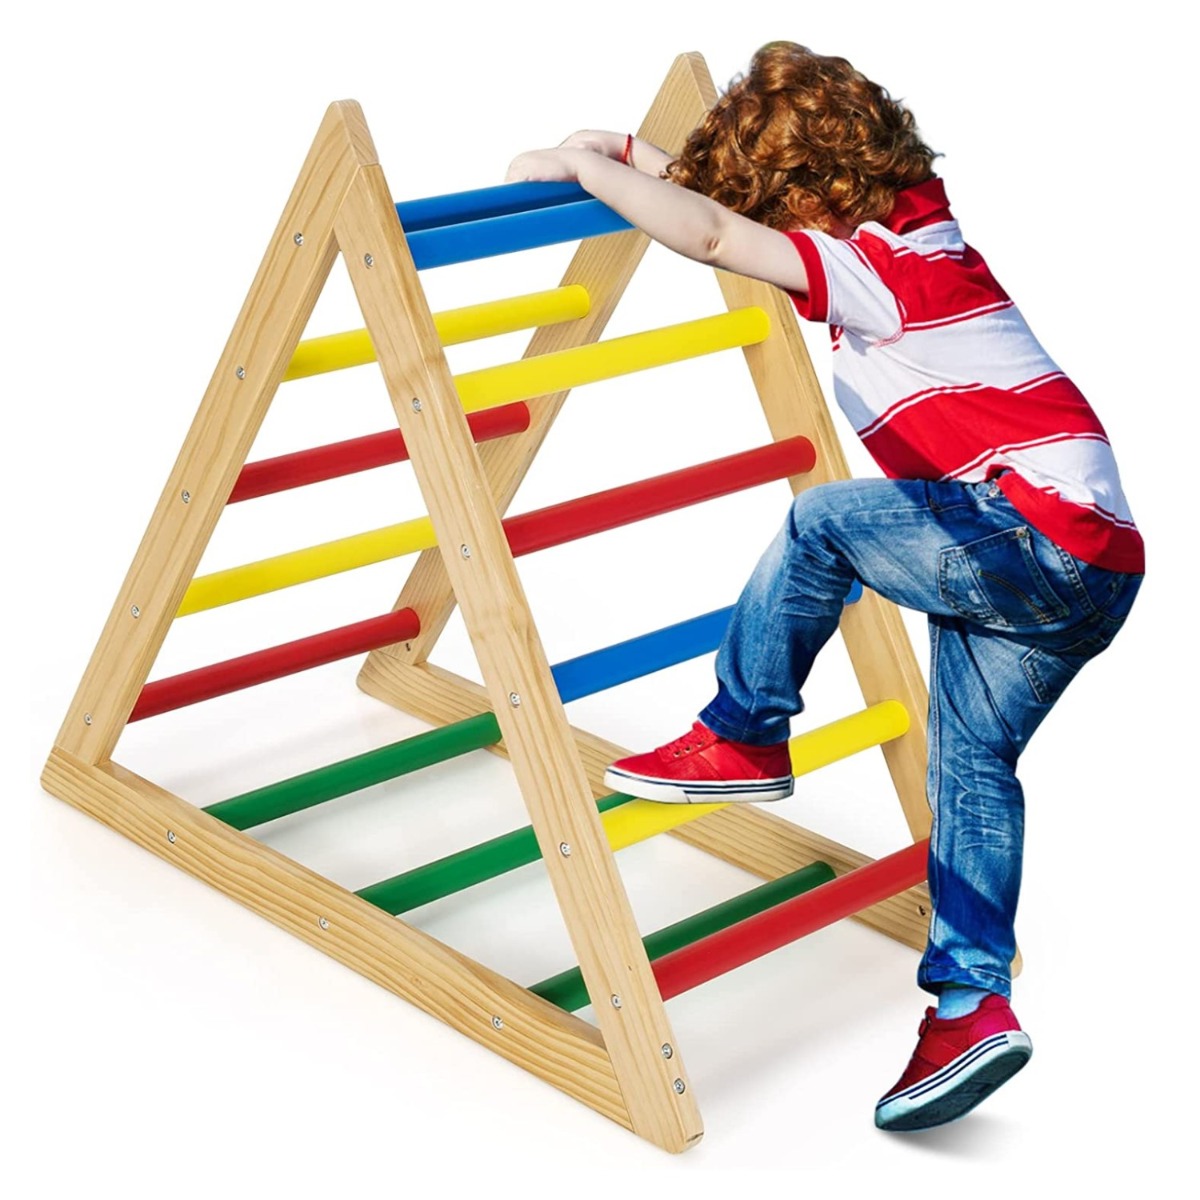 Climbing Triangle Ladder Houten Triangle Climbers voor kinderen 93 x 46 x 81 cm Kleurrijk